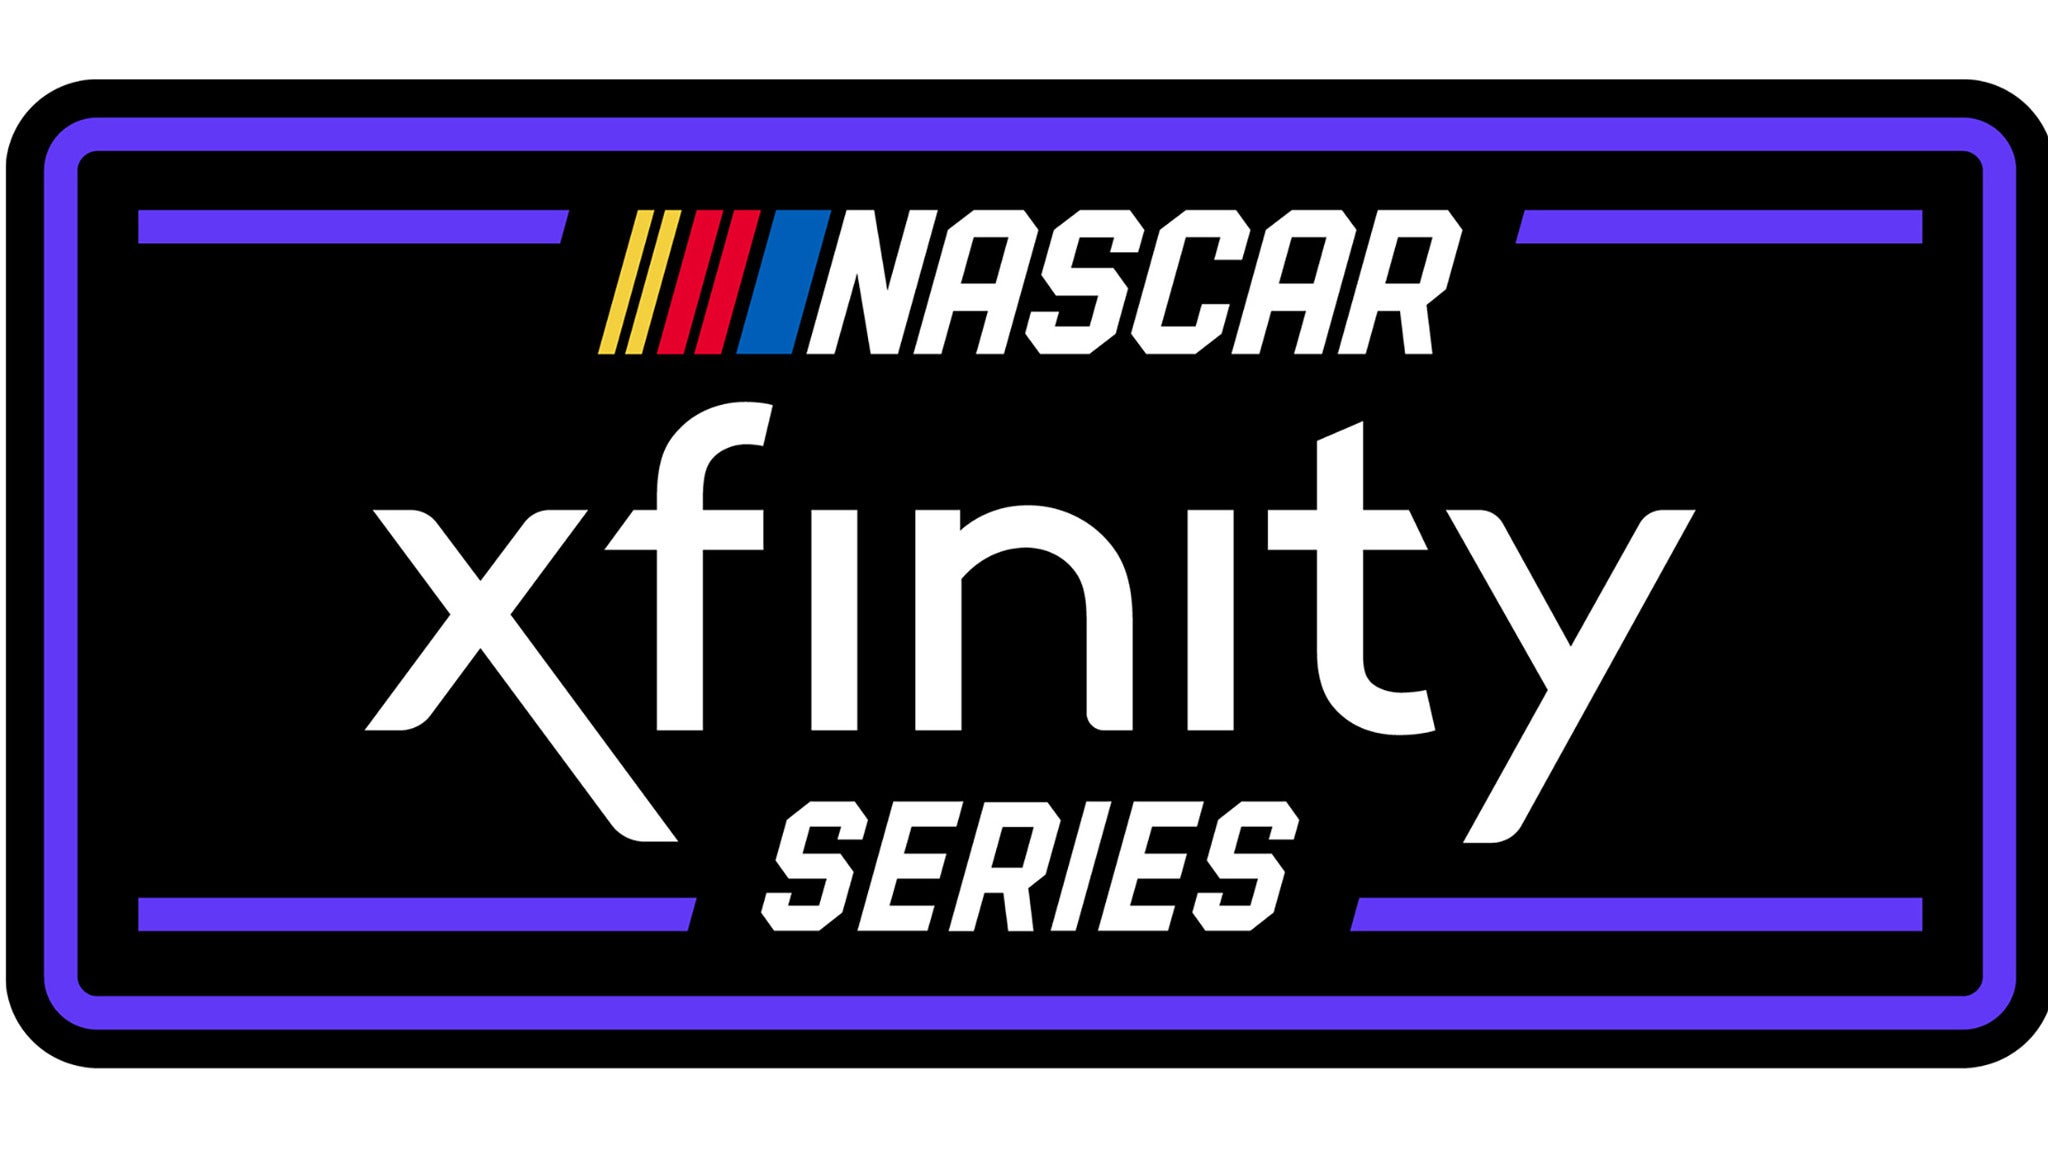 DoorDash 250 - NASCAR Xfinity Series at Sonoma Raceway